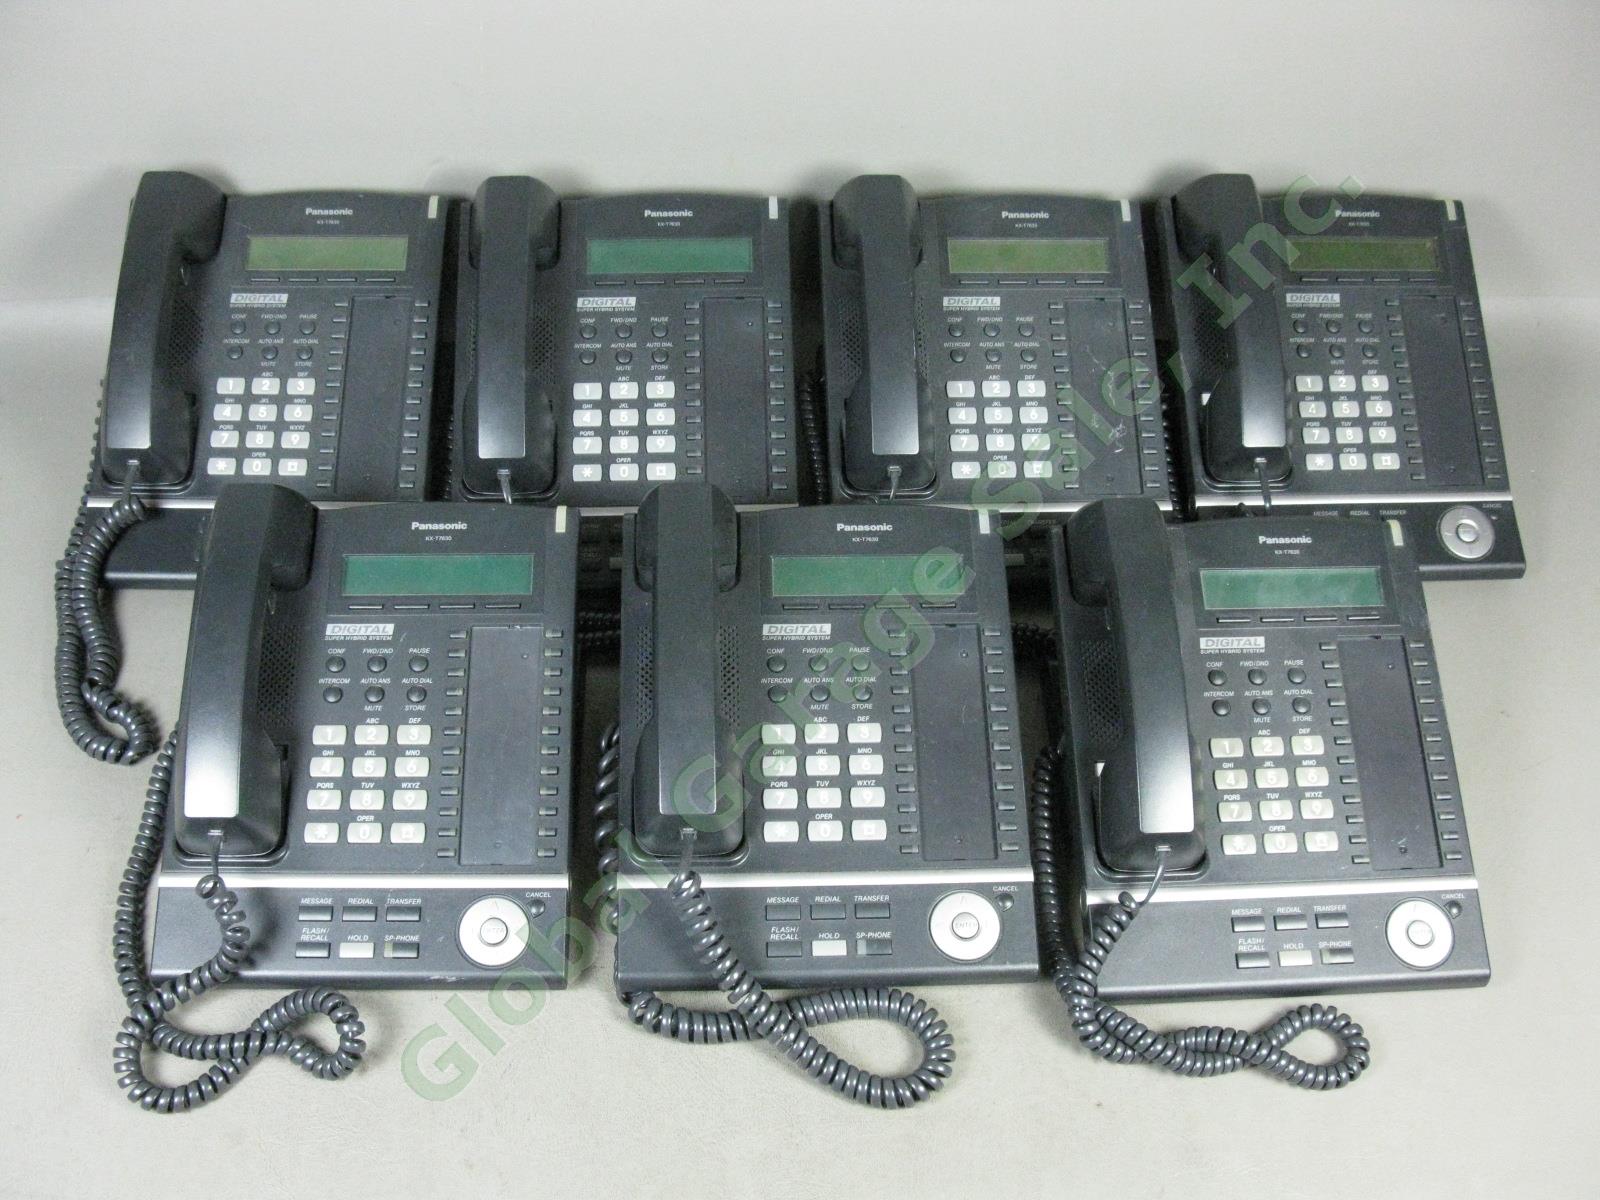 7 Panasonic KX-T7630-B Business Phones Digital Display Speakerphone System Lot